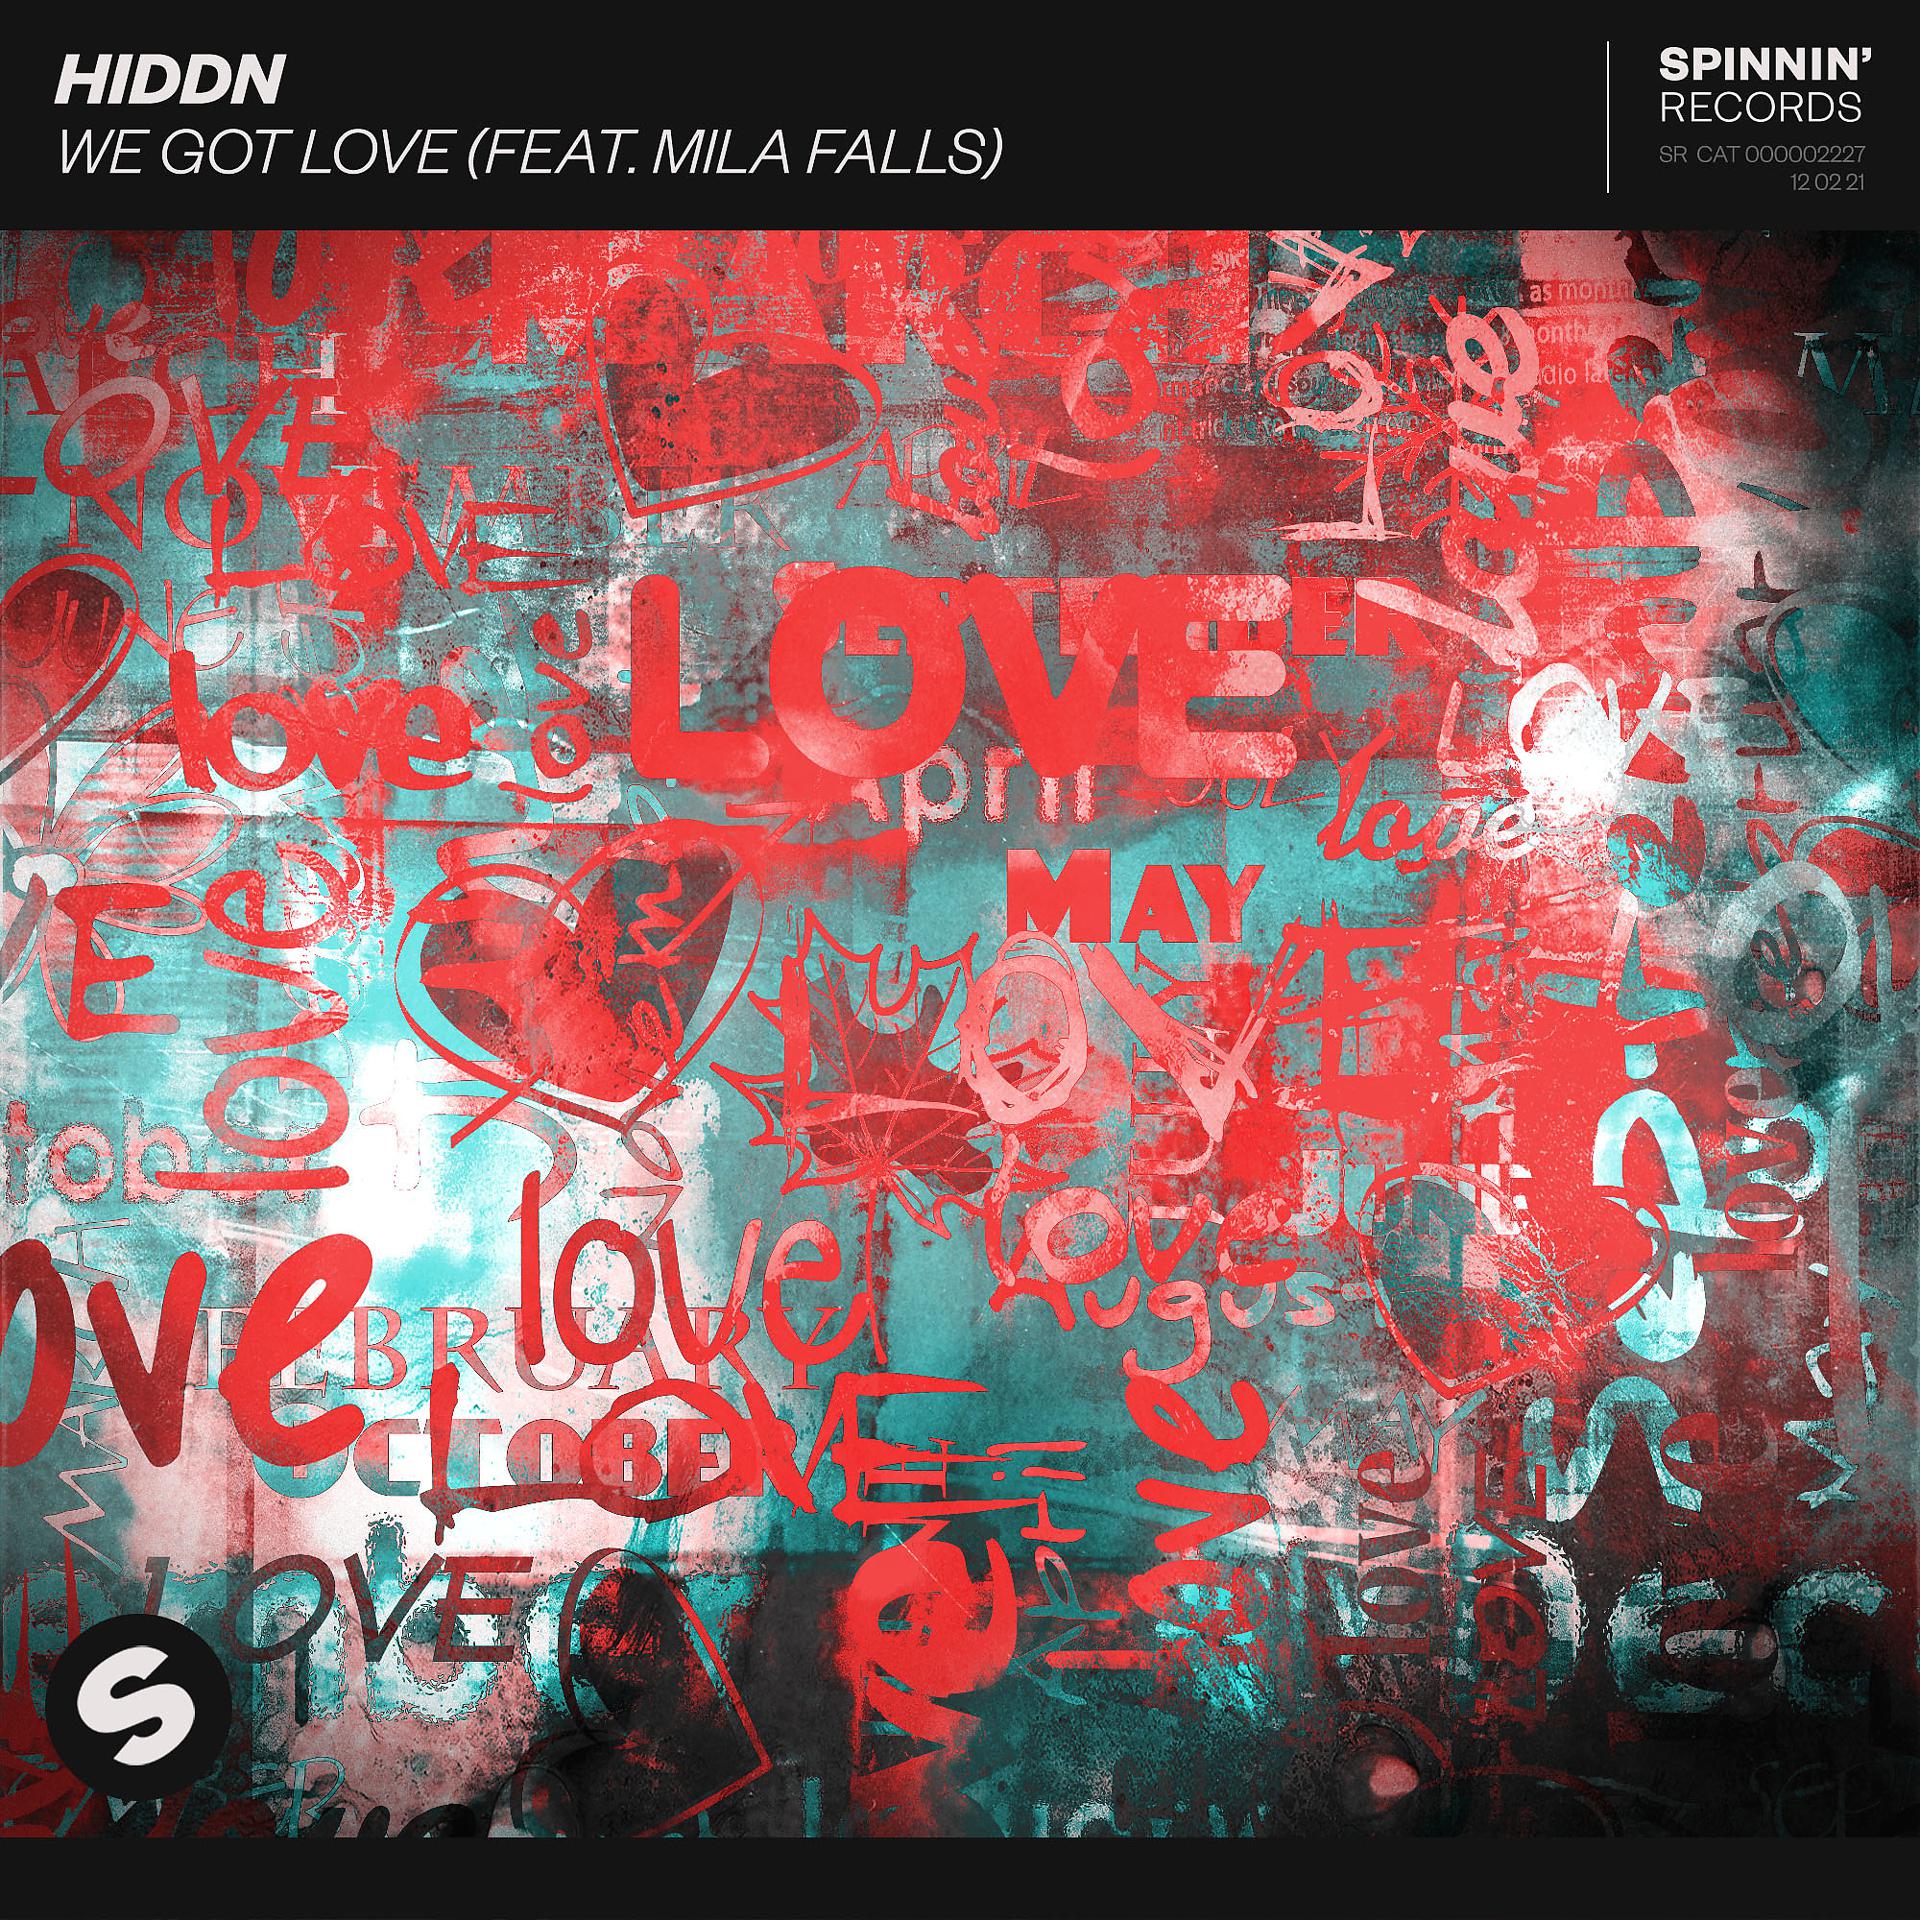 Hiddn/Mila Falls. We got Love. Medusa Love. We got get Love обложка.